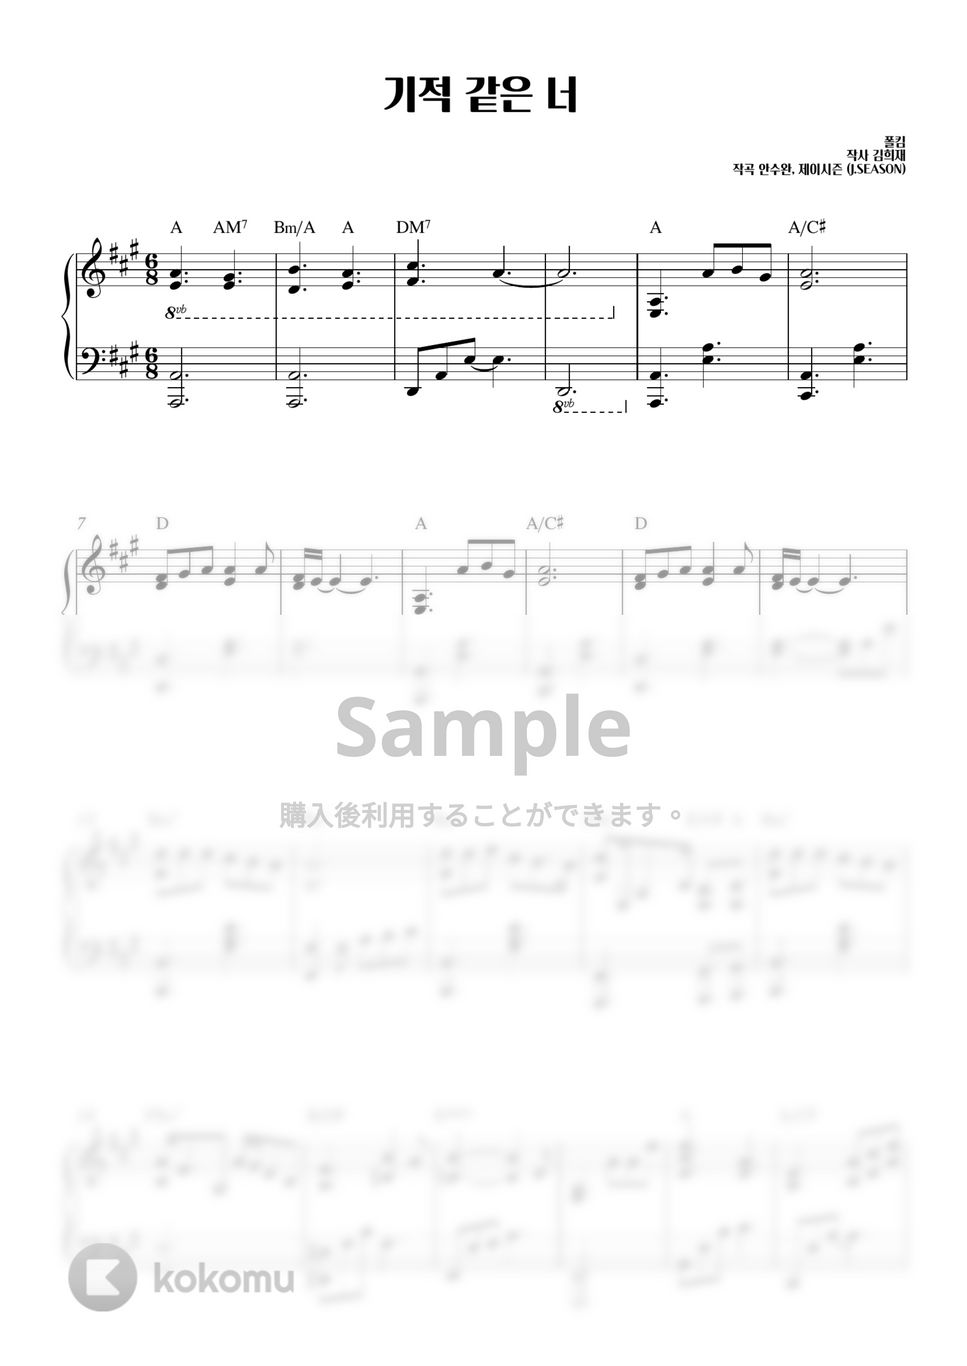 Paul Kim (폴킴) - The Miracle (기적 같은 너) (Reborn Rich OST) by SweetPiano